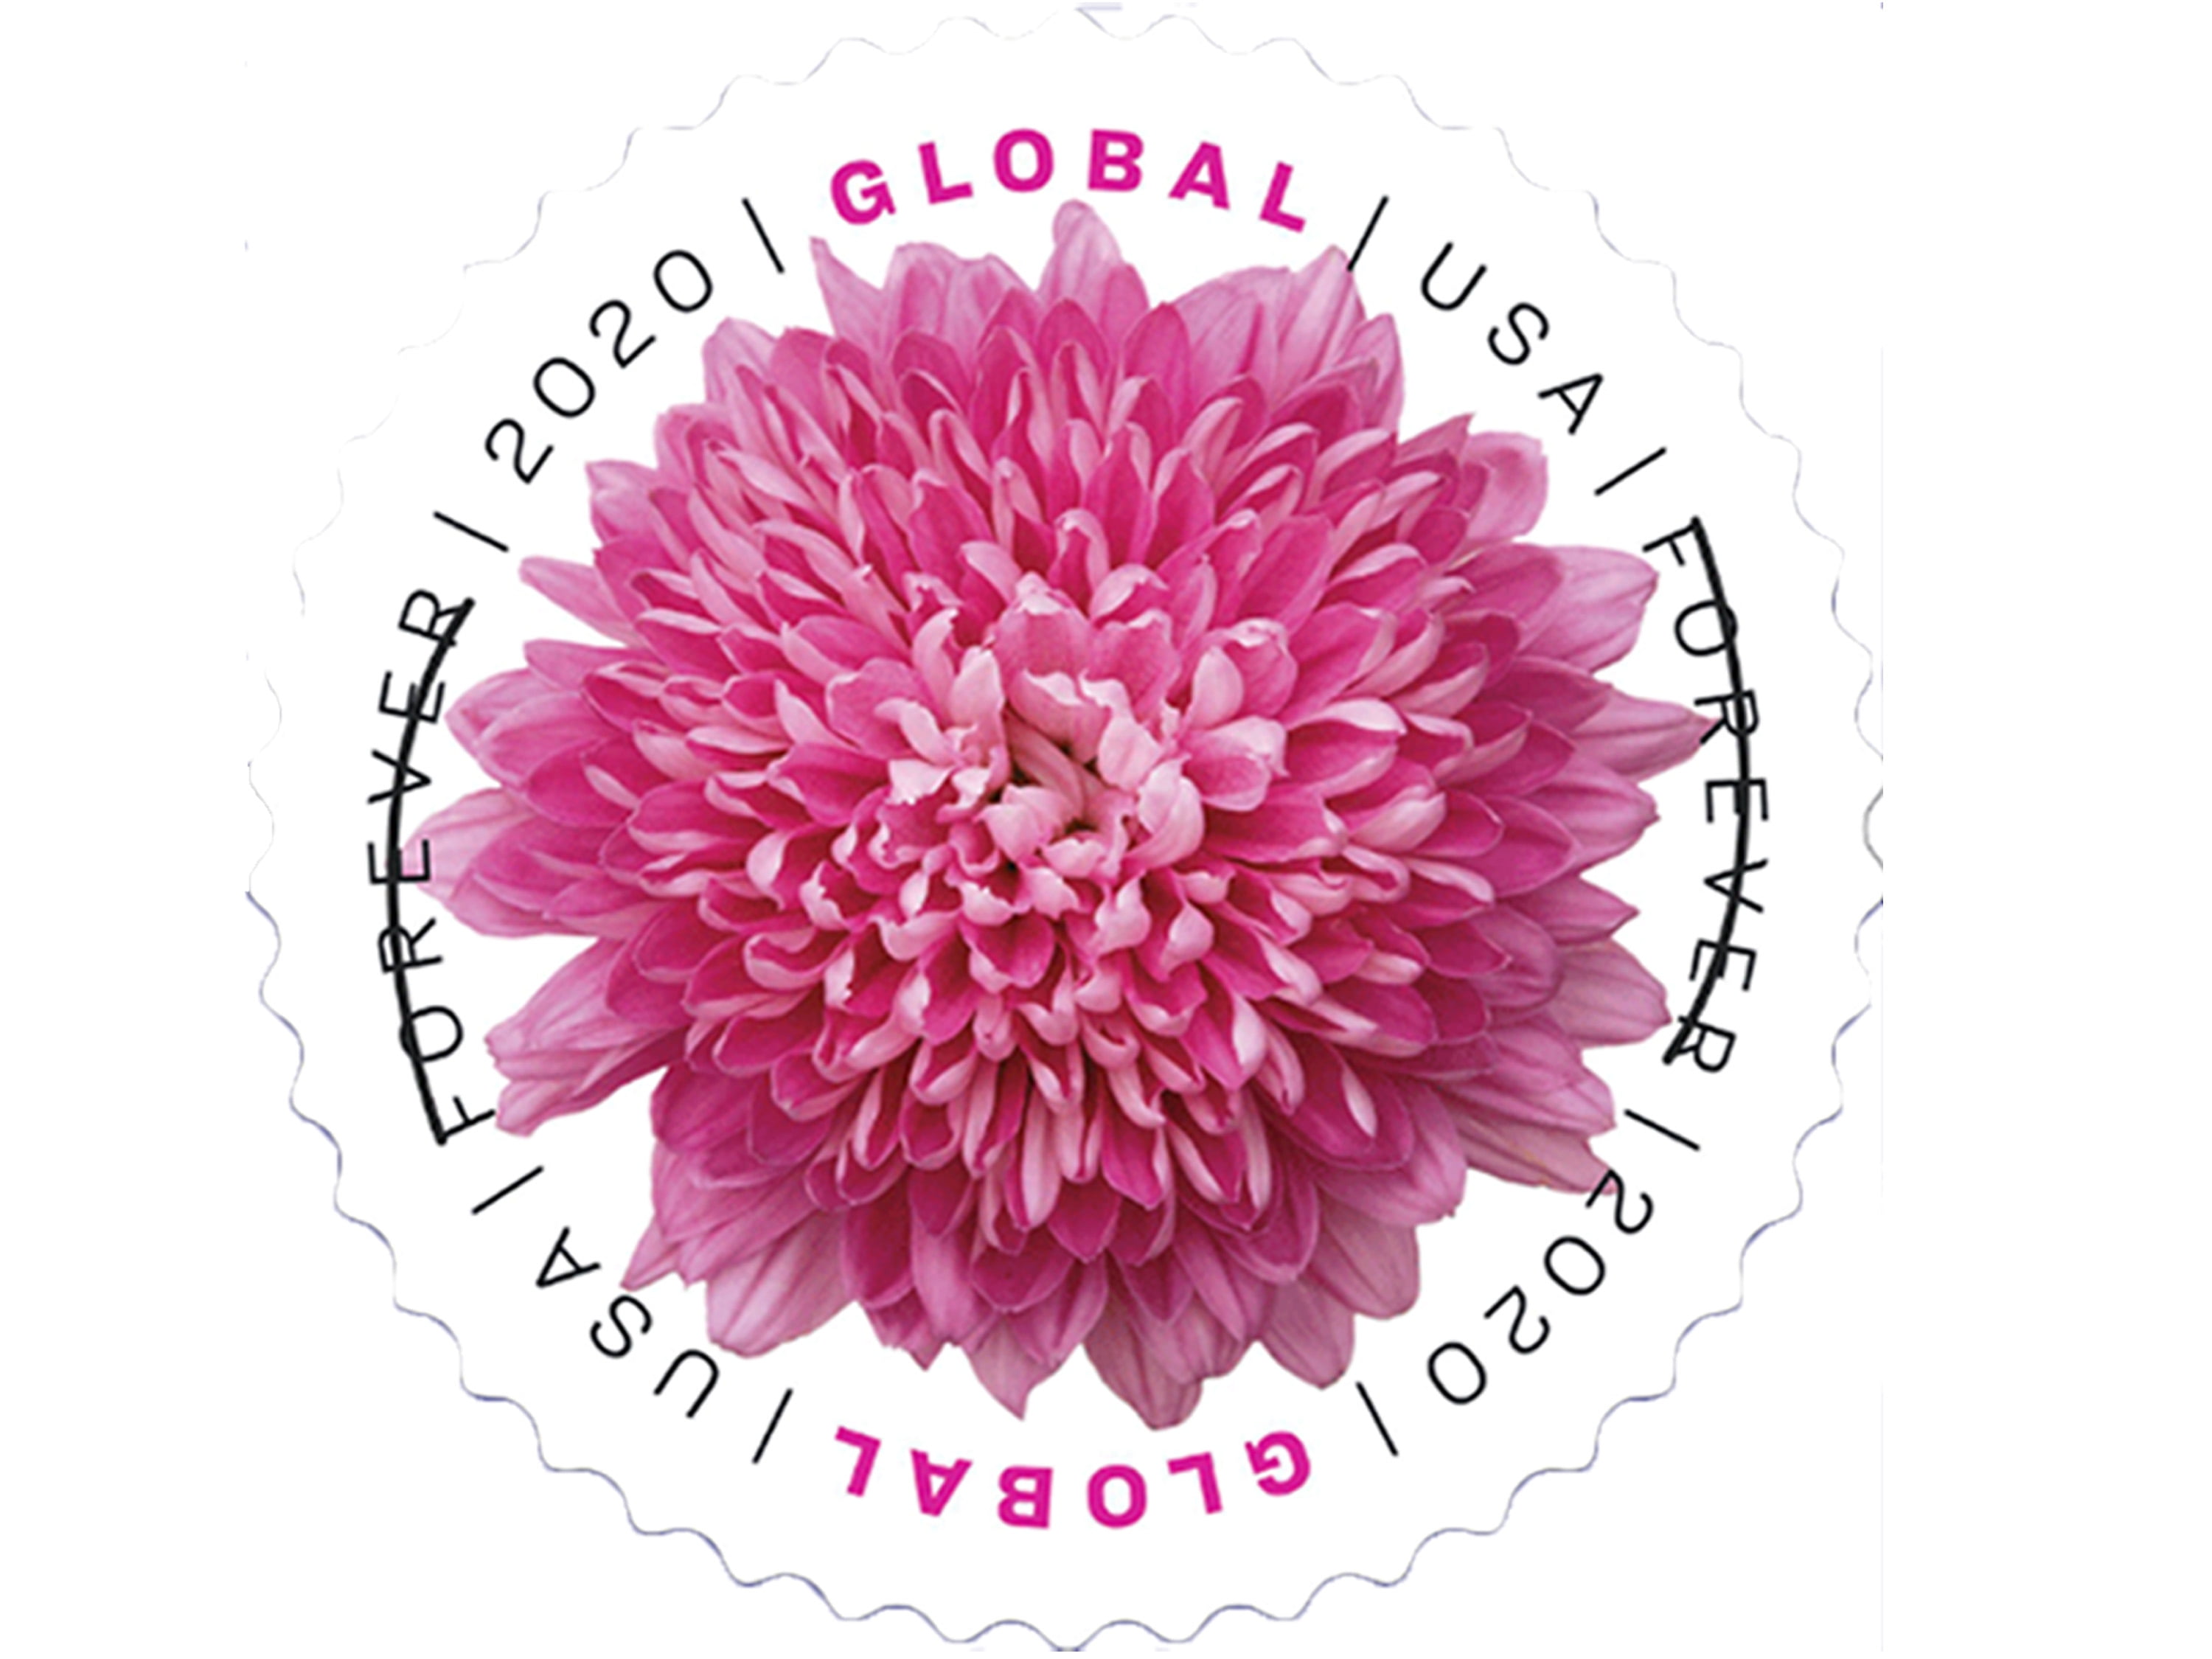 Global International Chrysanthemum Sheet of 10 USPS Postal 1st Class Mail Forever US Postage Stamps Wedding Celebration Engagement Anniversary Bridal